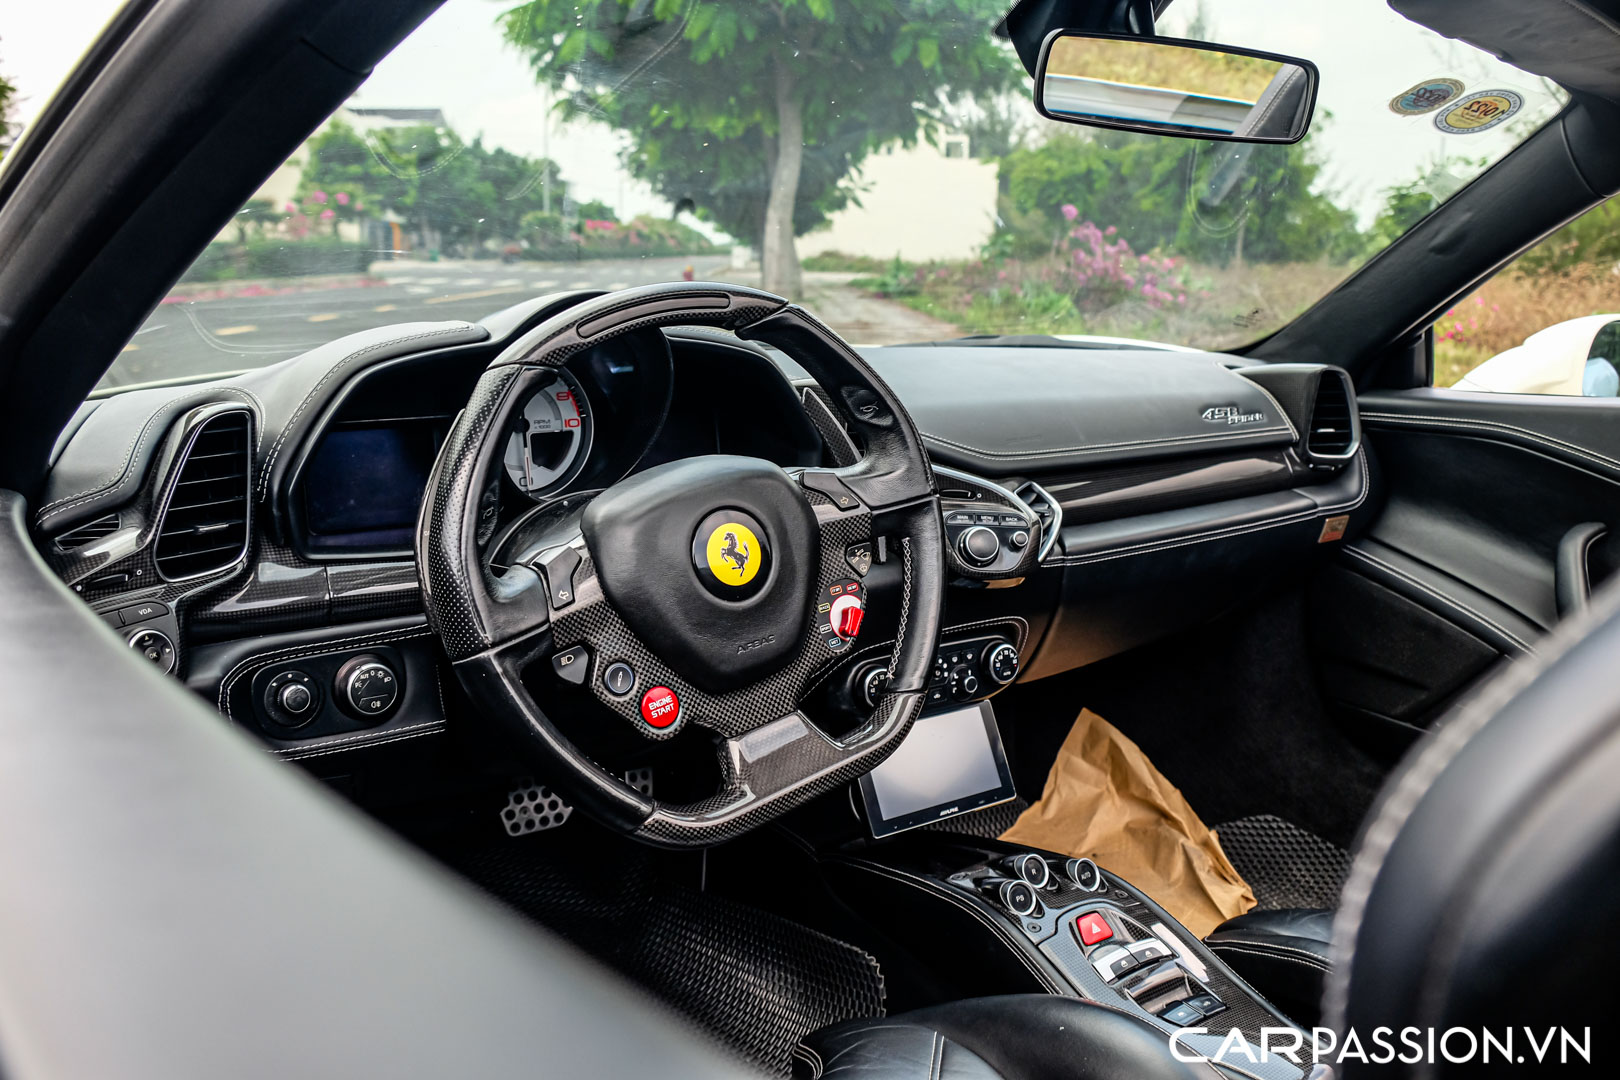 CP-Ferrari 458 Spider34.jpg